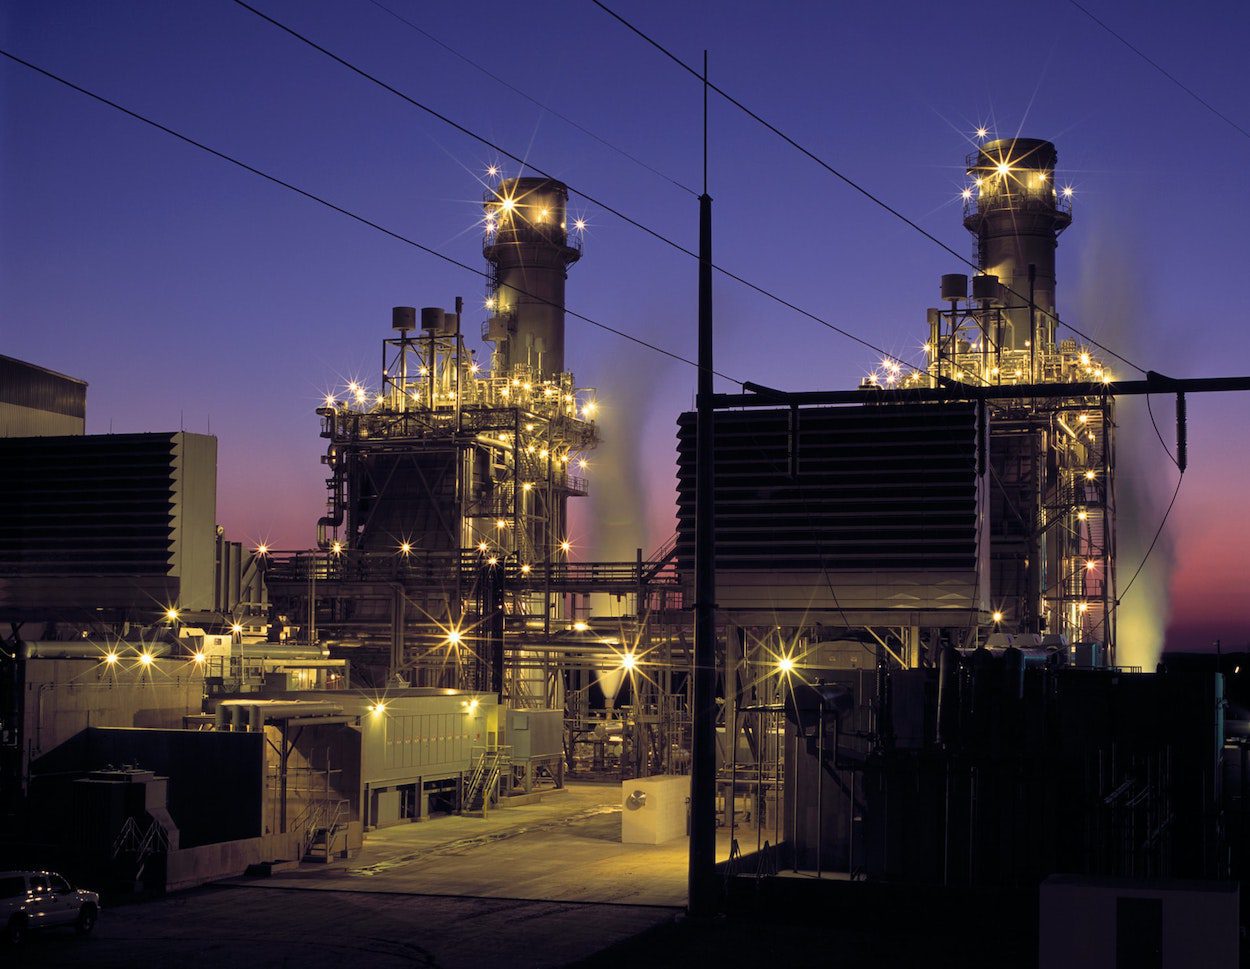 A power plant lit against an evening sky.